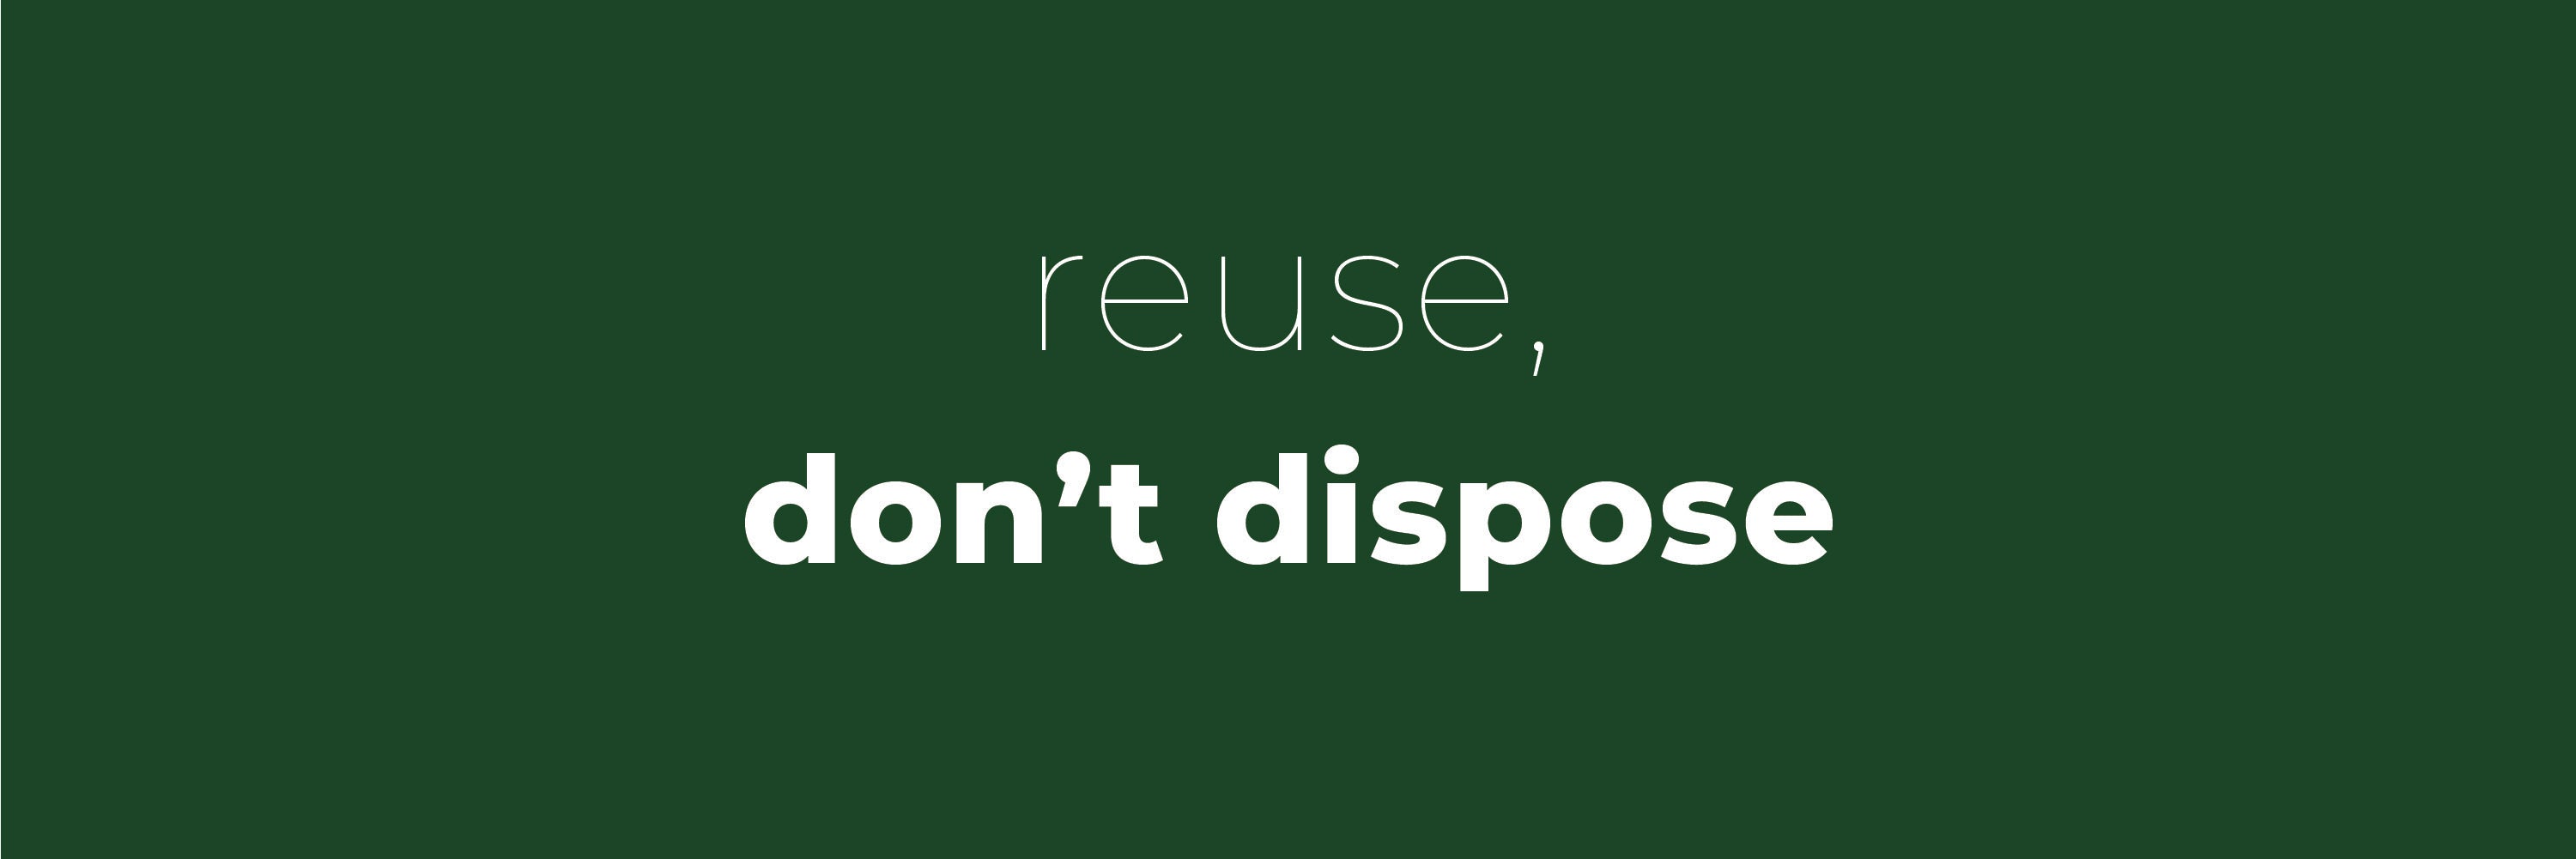 Reuse, don't dispose